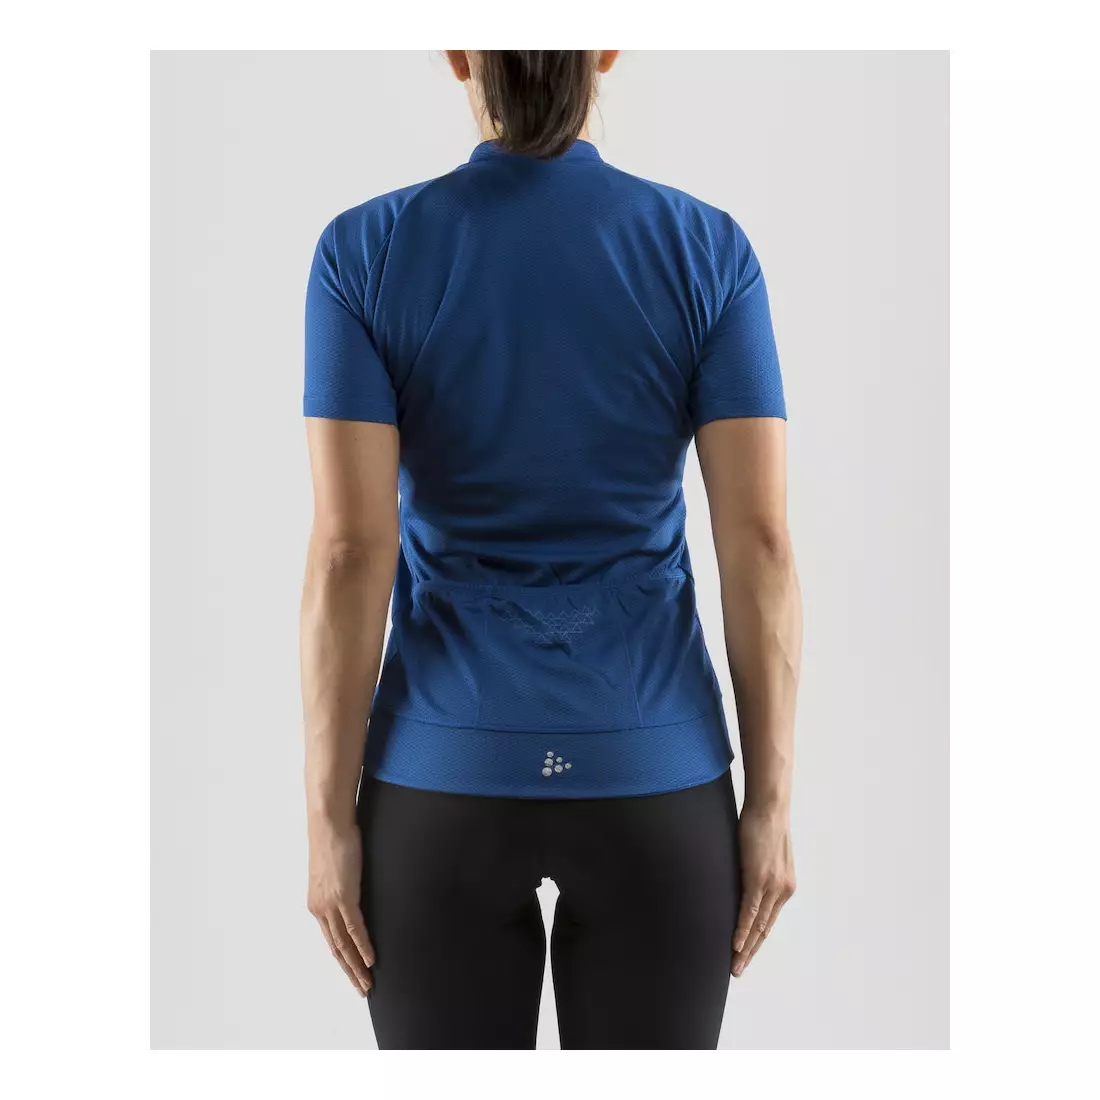 CRAFT RISE women's cycling jersey, blue, 1906075-367352